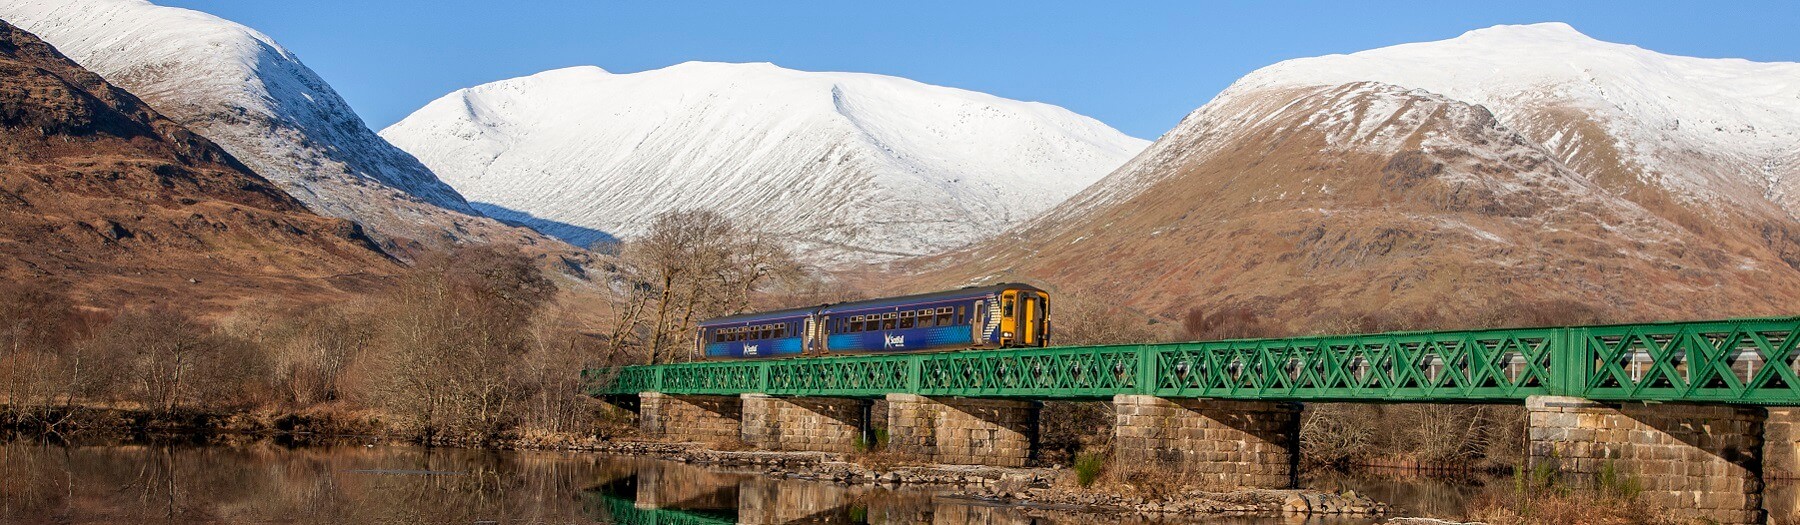 ScotRail train crossing bridge at Loch Awe in winter